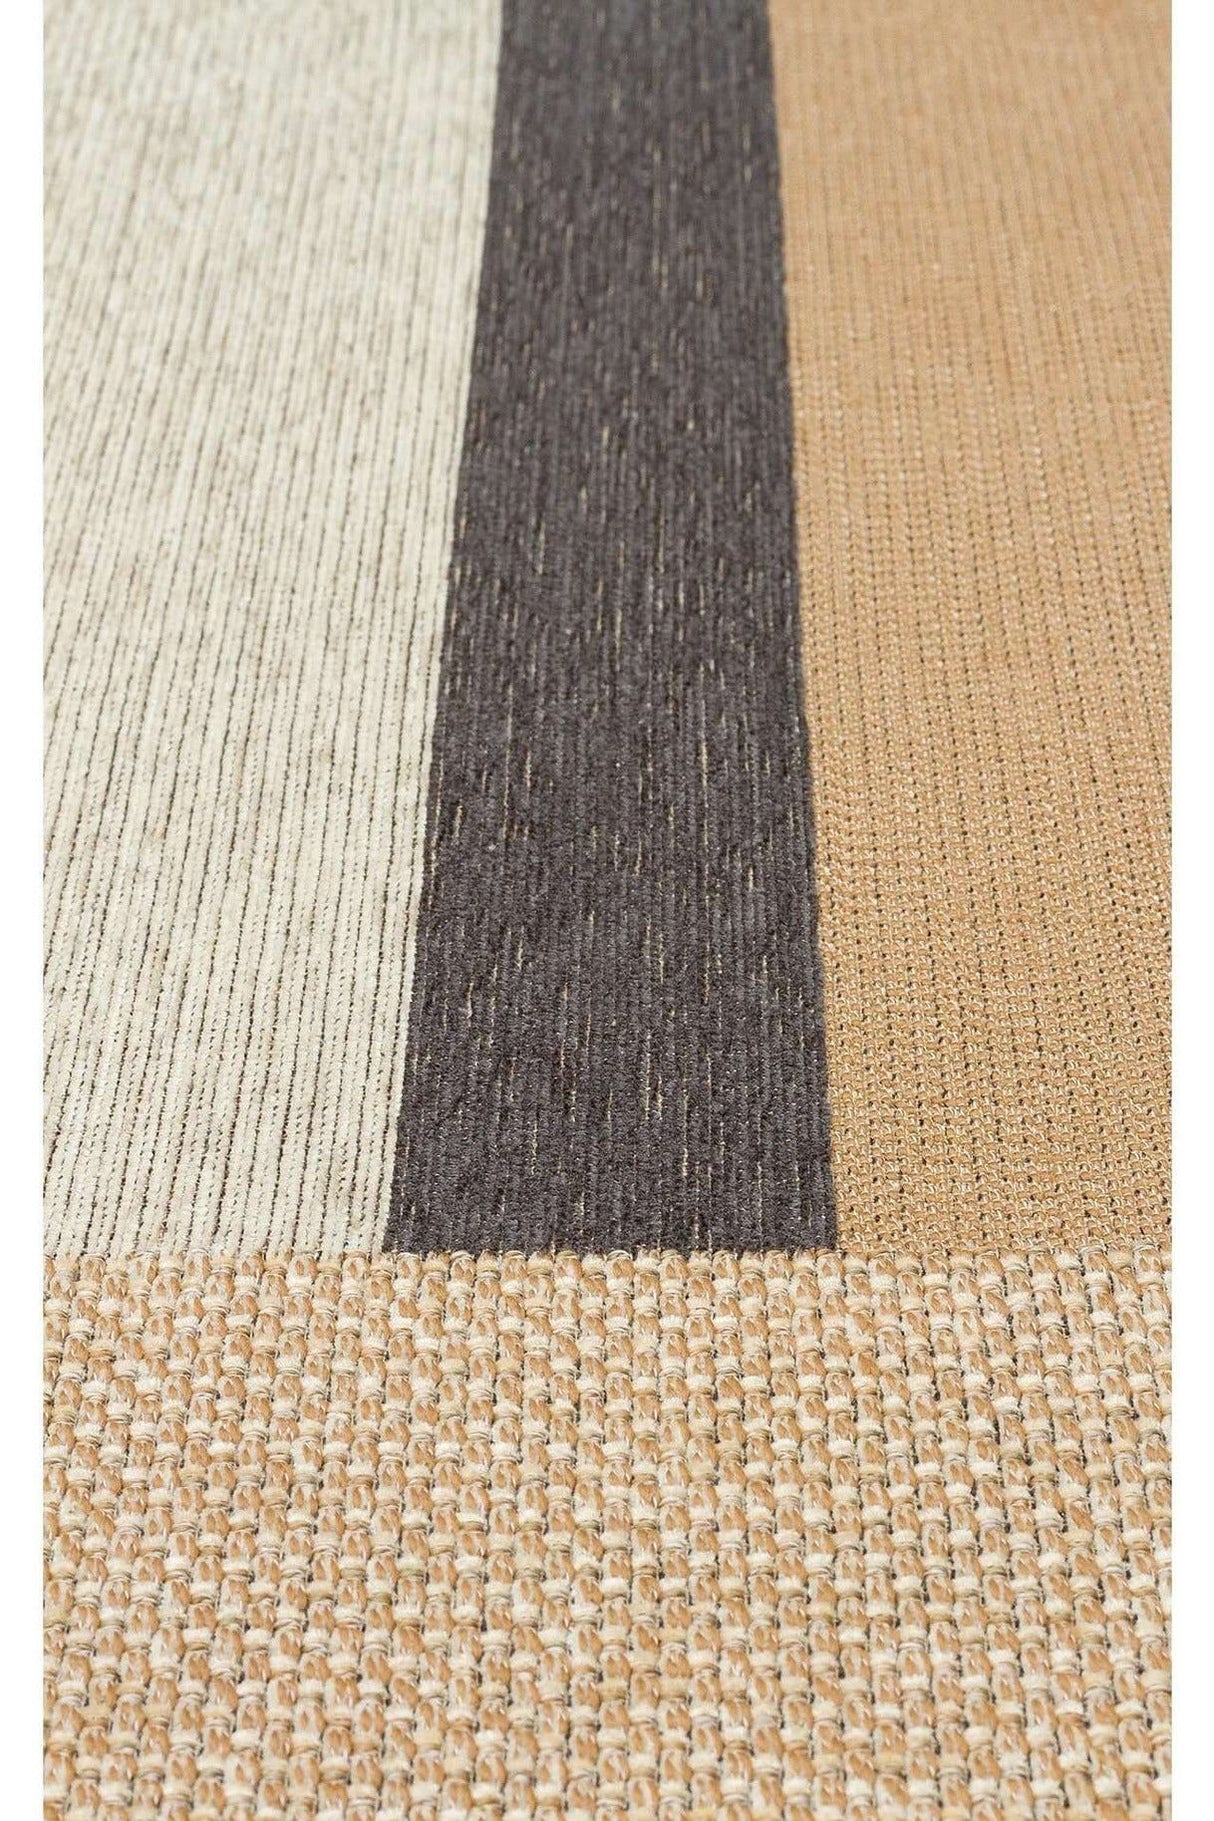 #Turkish_Carpets_Rugs# #Modern_Carpets# #Abrash_Carpets#Brk 14 Natural Grey